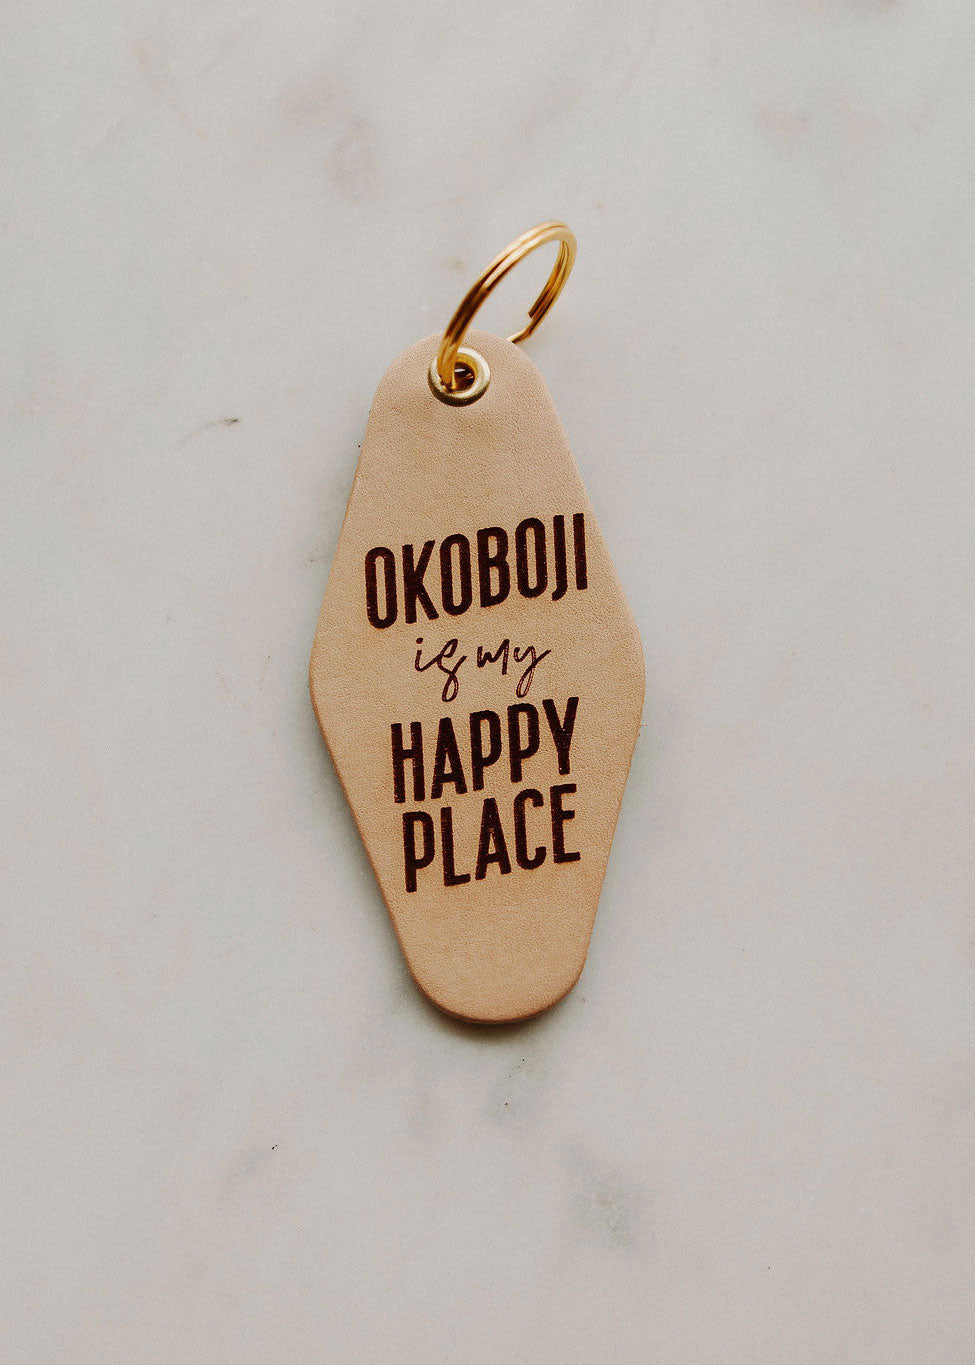 OKOBOJI IS MY HAPPY PLACE LEATHER & VELVET KEYCHAIN